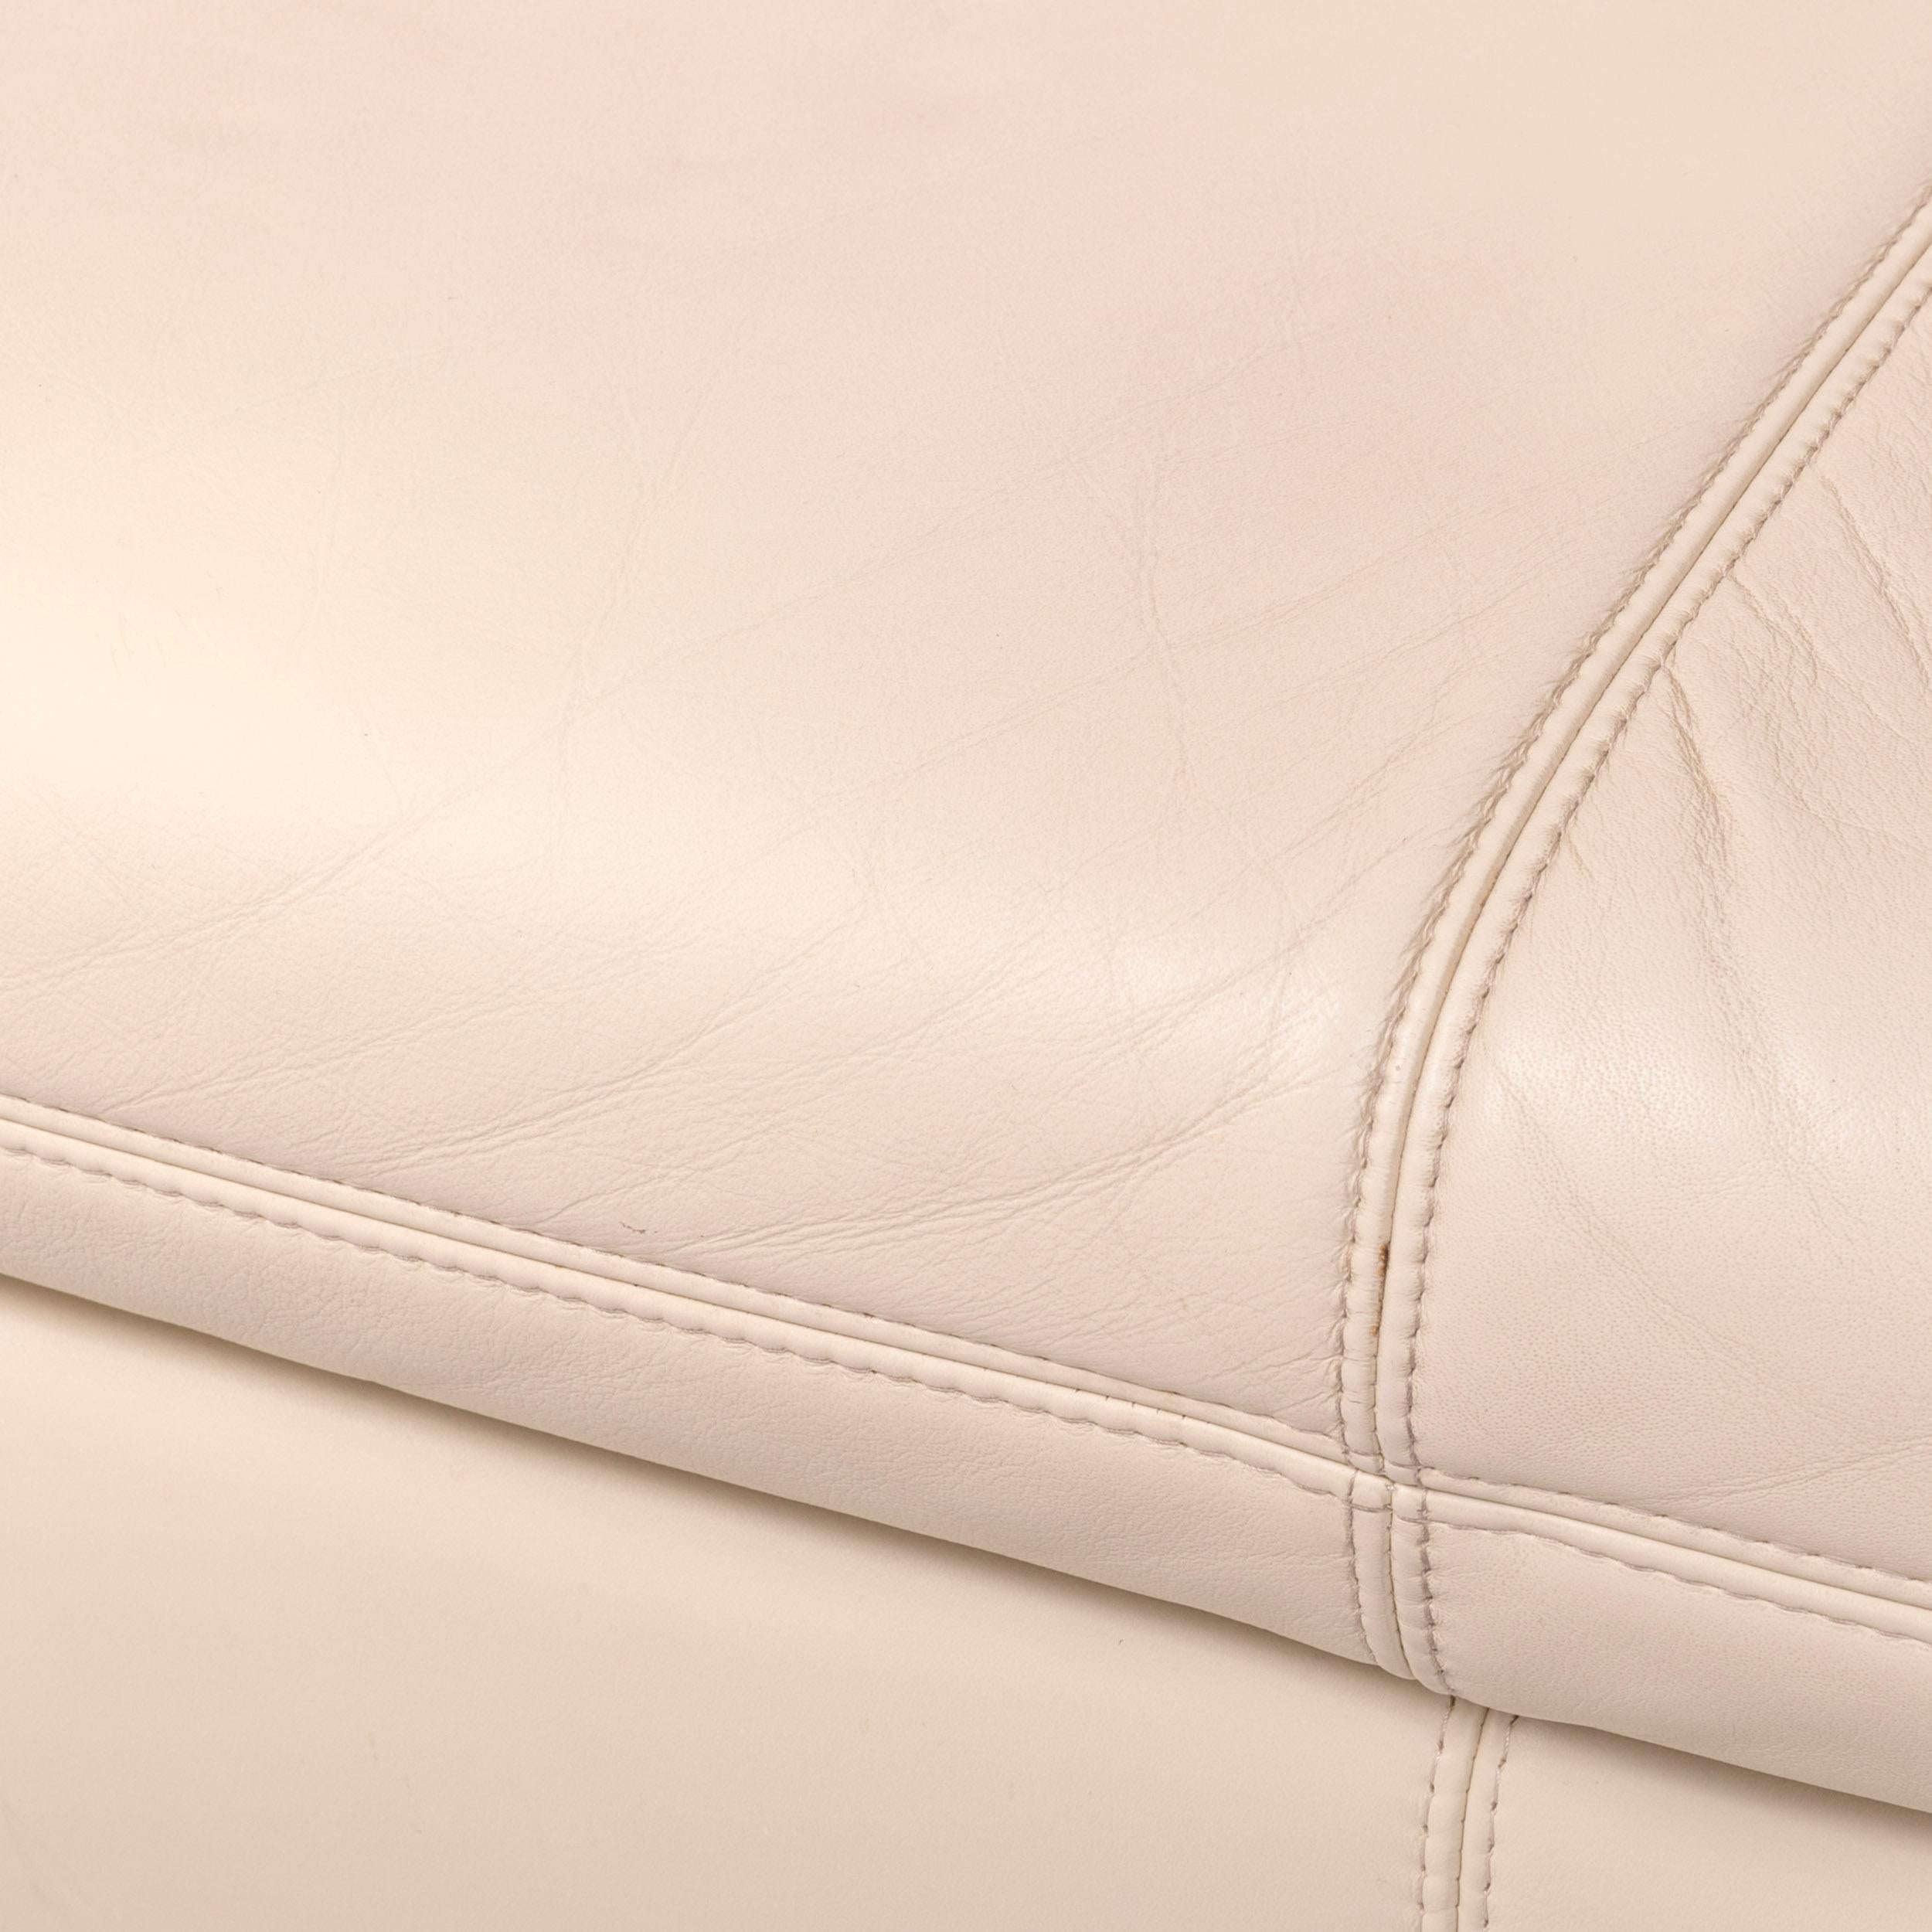 Koinor Rivoli Designer Leather Sofa Beige Genuine Leather Three-Seat Couch For Sale 1